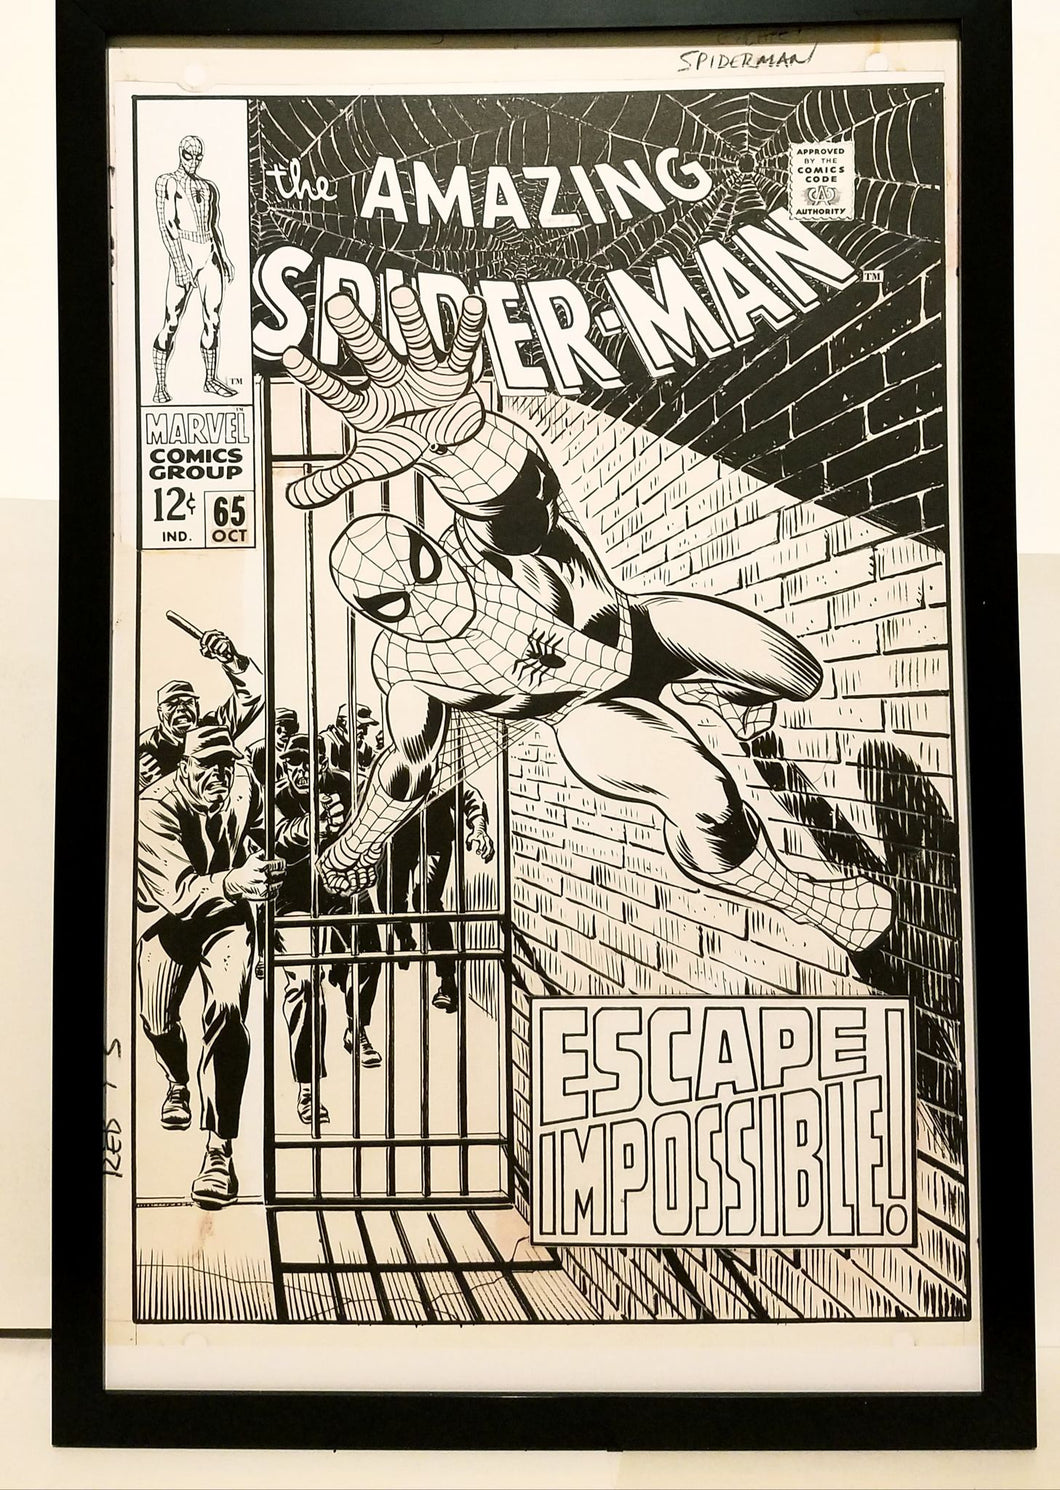 Amazing Spider-Man #65 by John Romita 11x17 FRAMED Original Art Poster Marvel Comics